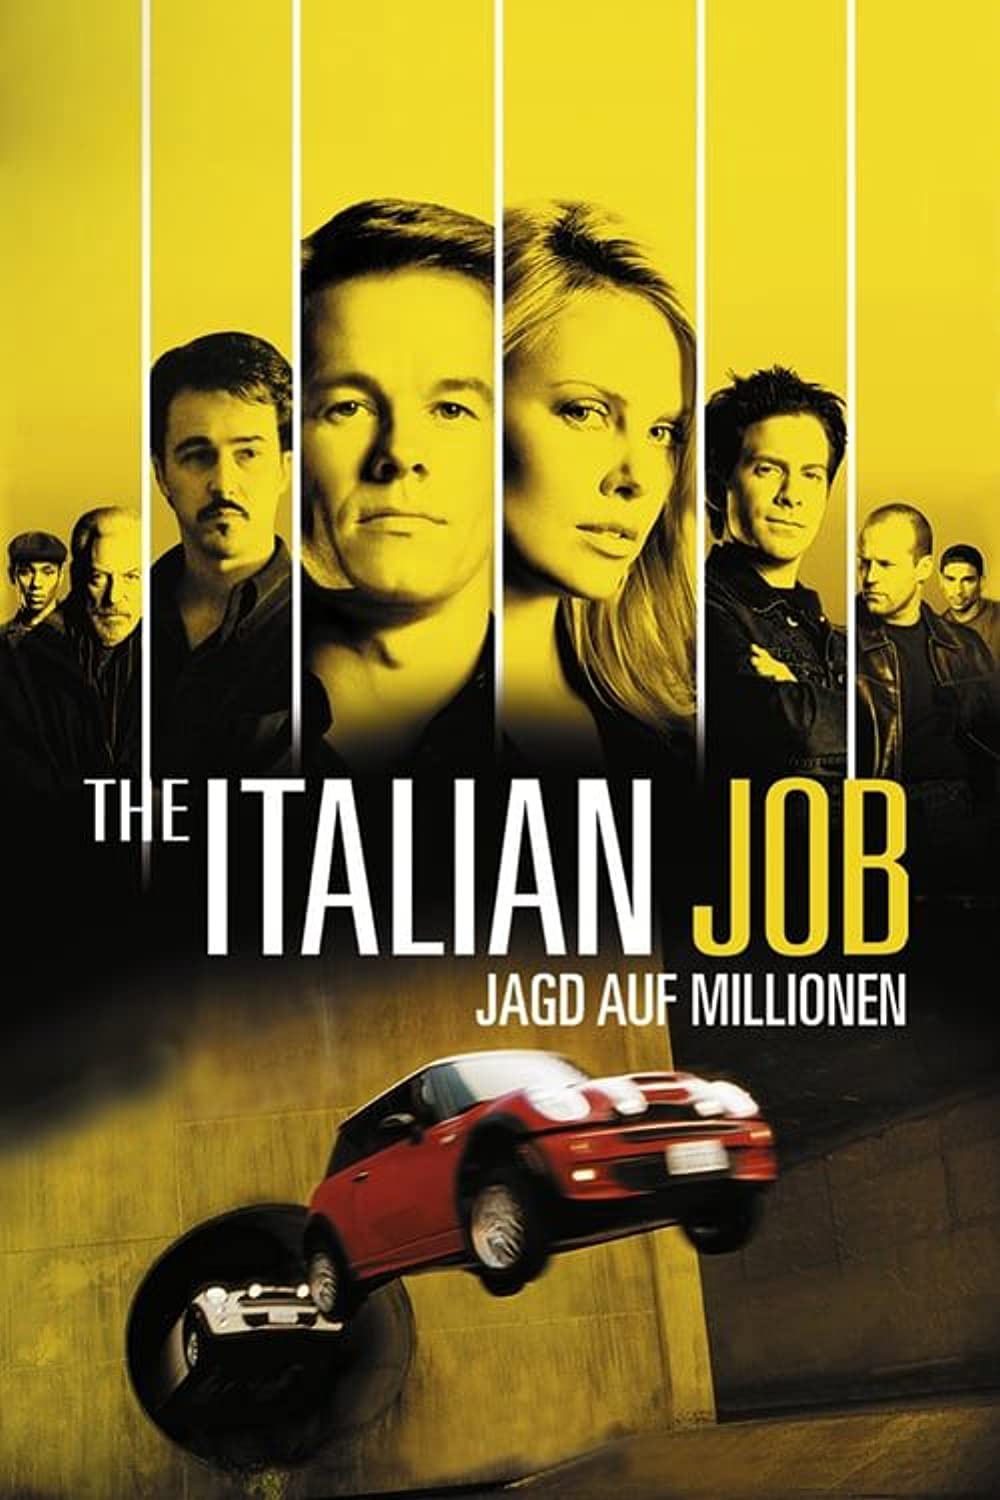 Filmbeschreibung zu The Italian Job